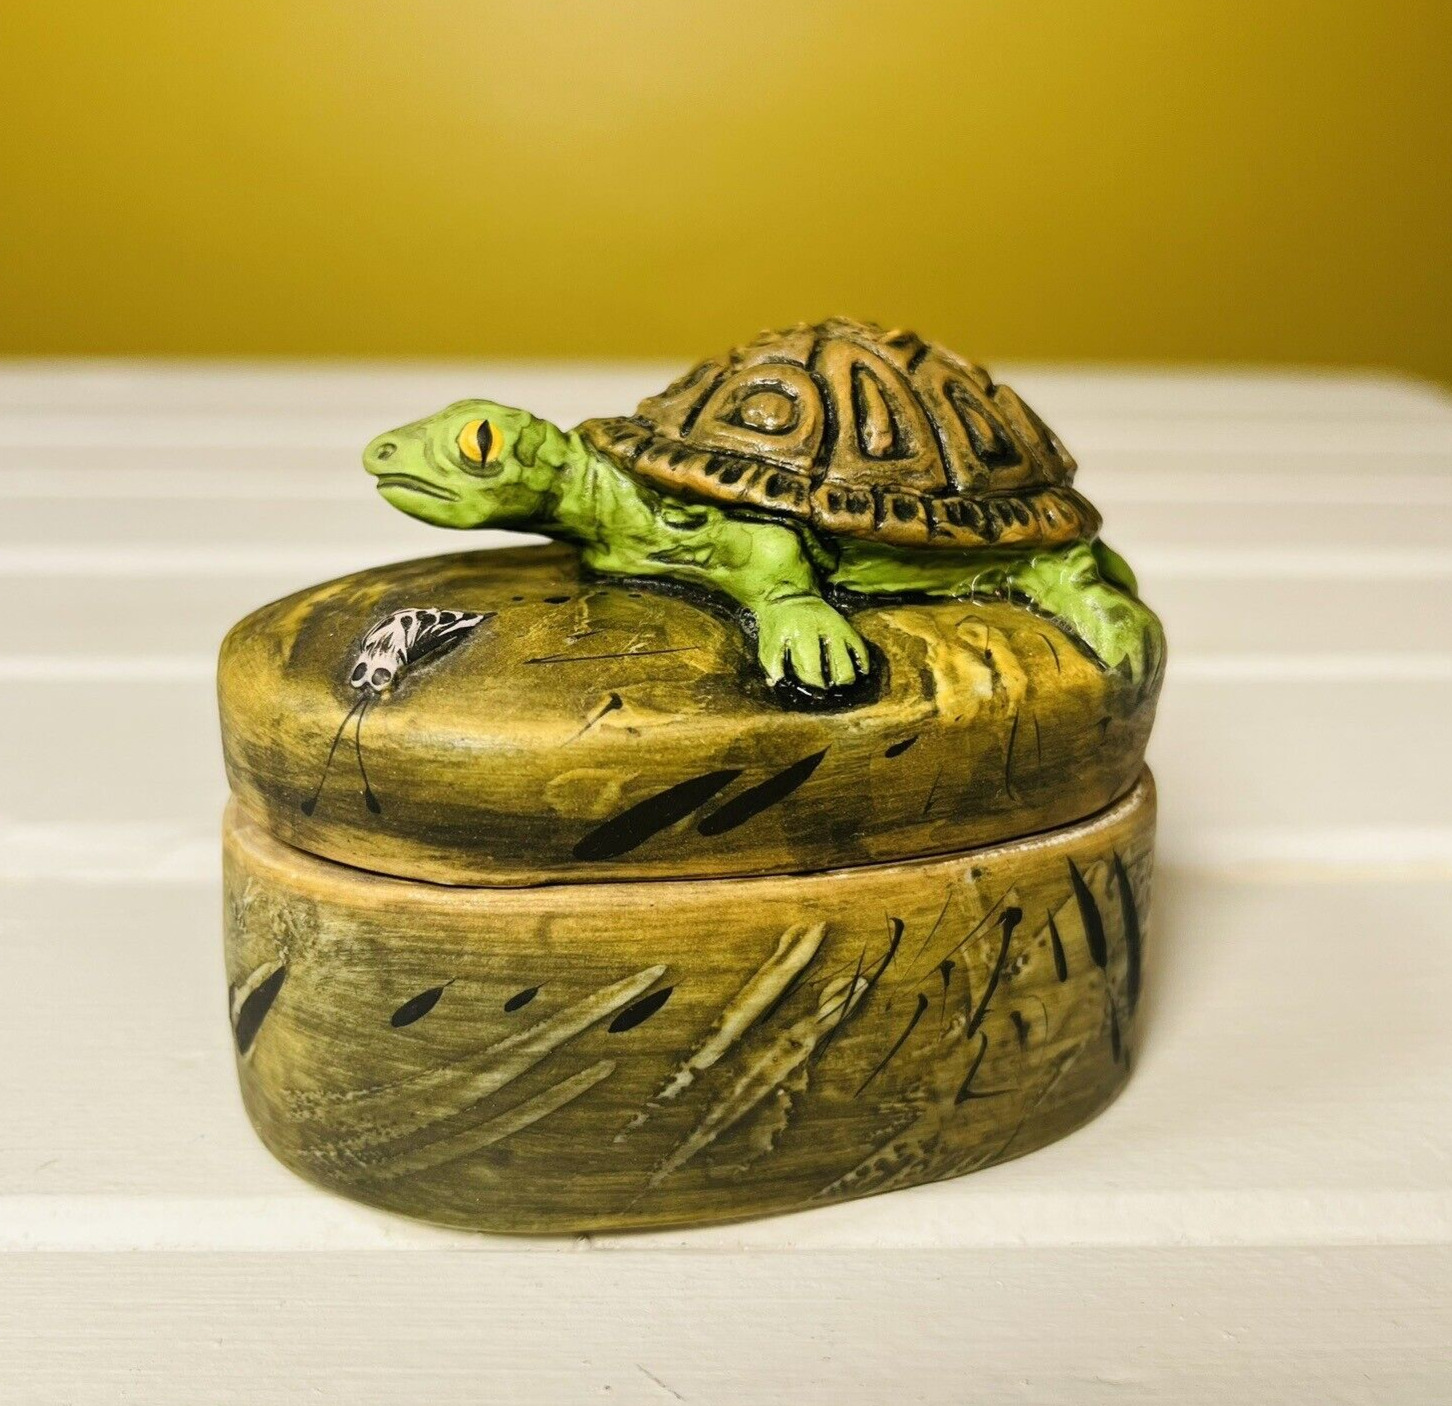 Vintage TOM HATTON Trinket Box Turtle Moth Made USA 1995 Matte Finish Signed